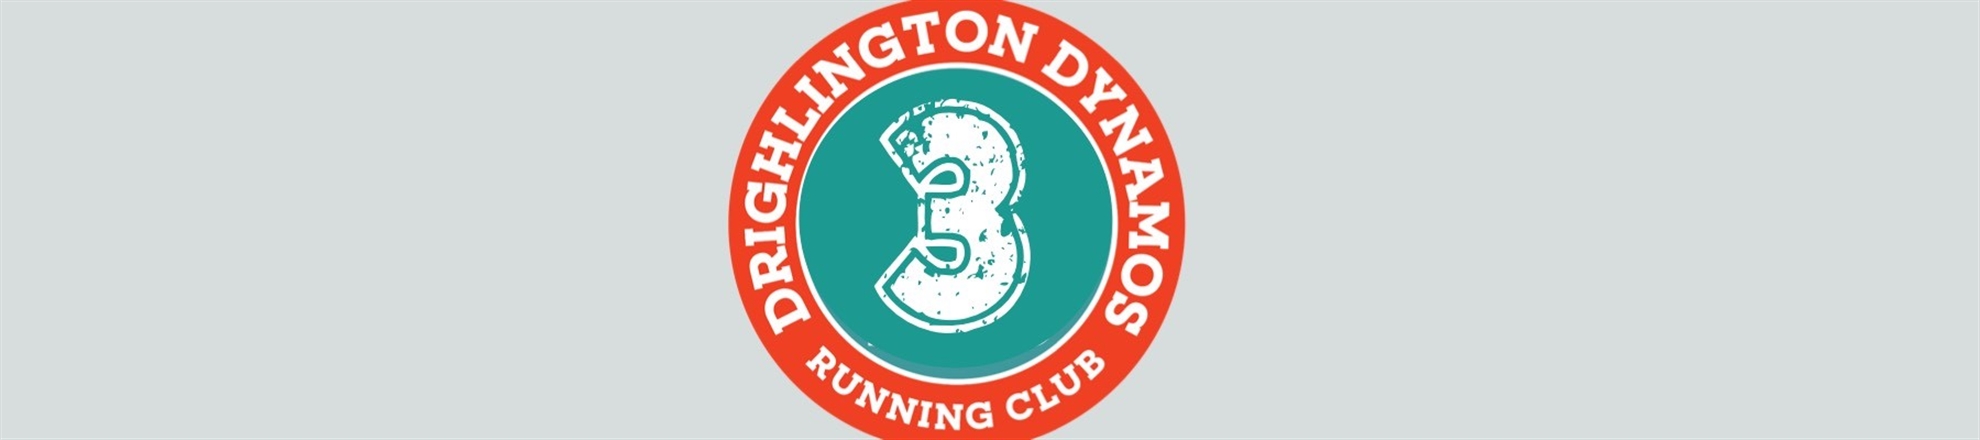 Drighlington Community Sports Club - Group 3